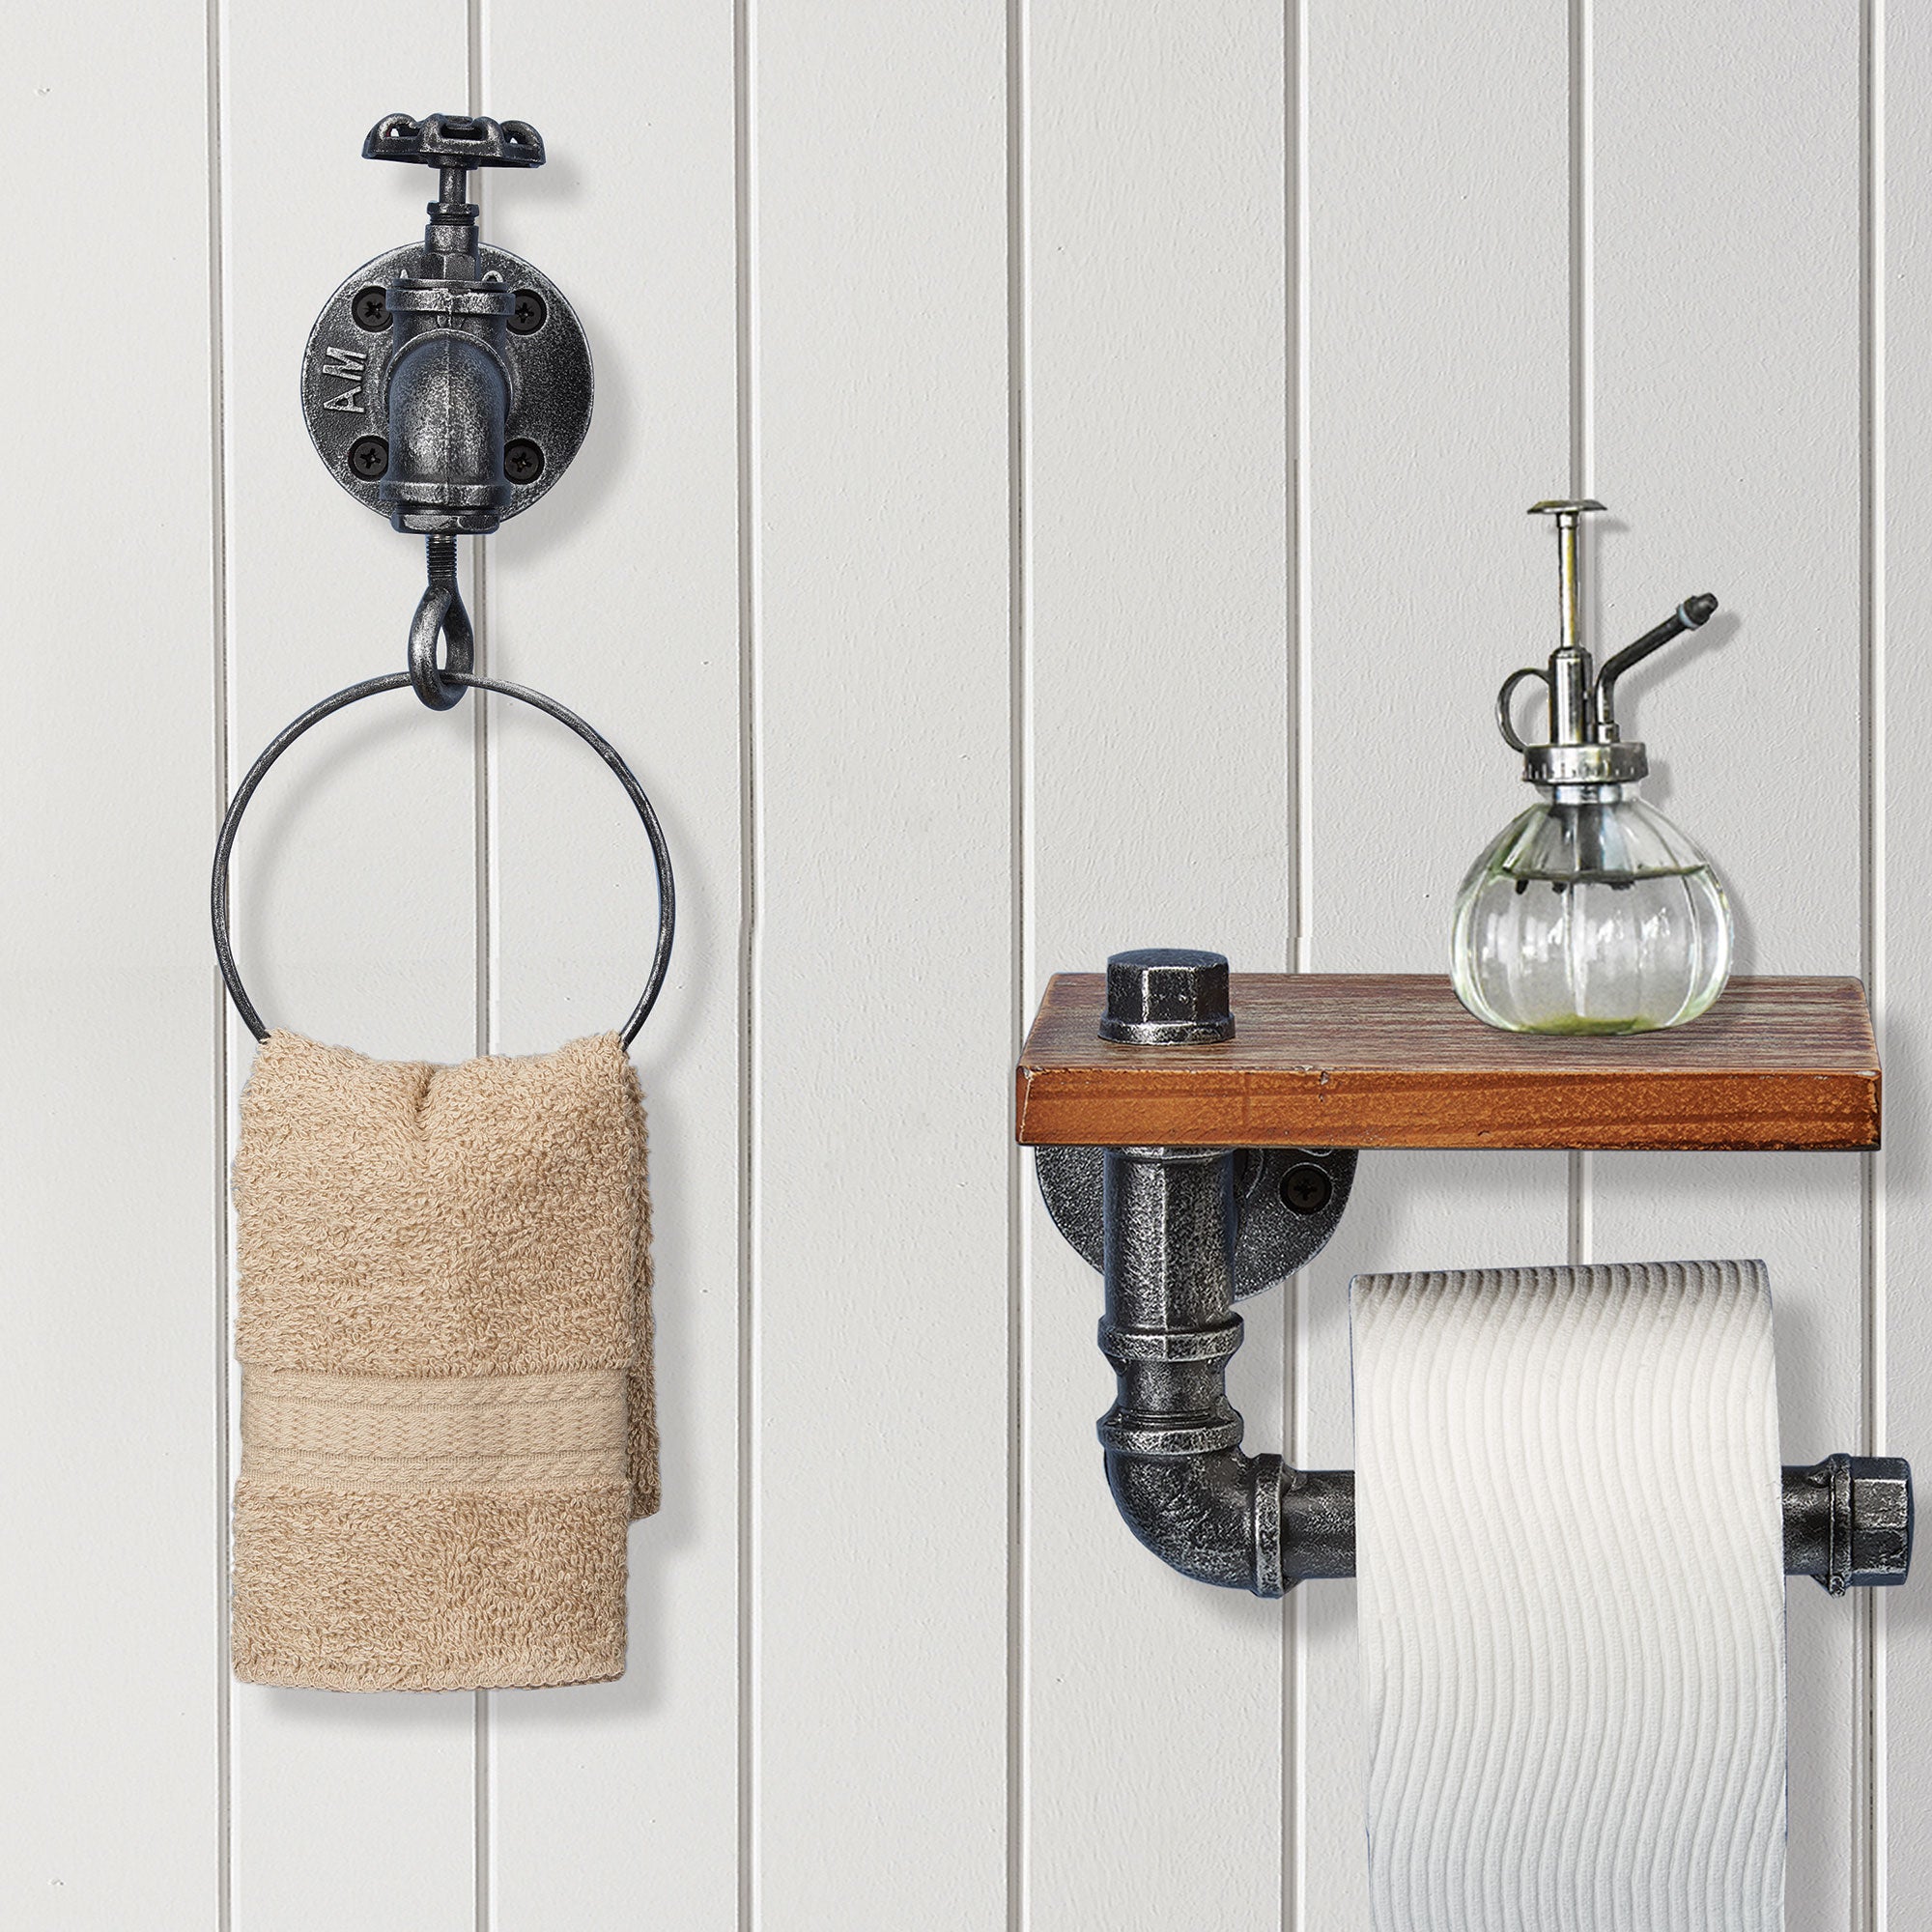 Barnyard Designs Industrial Toilet Paper Holder Stand - Rustic